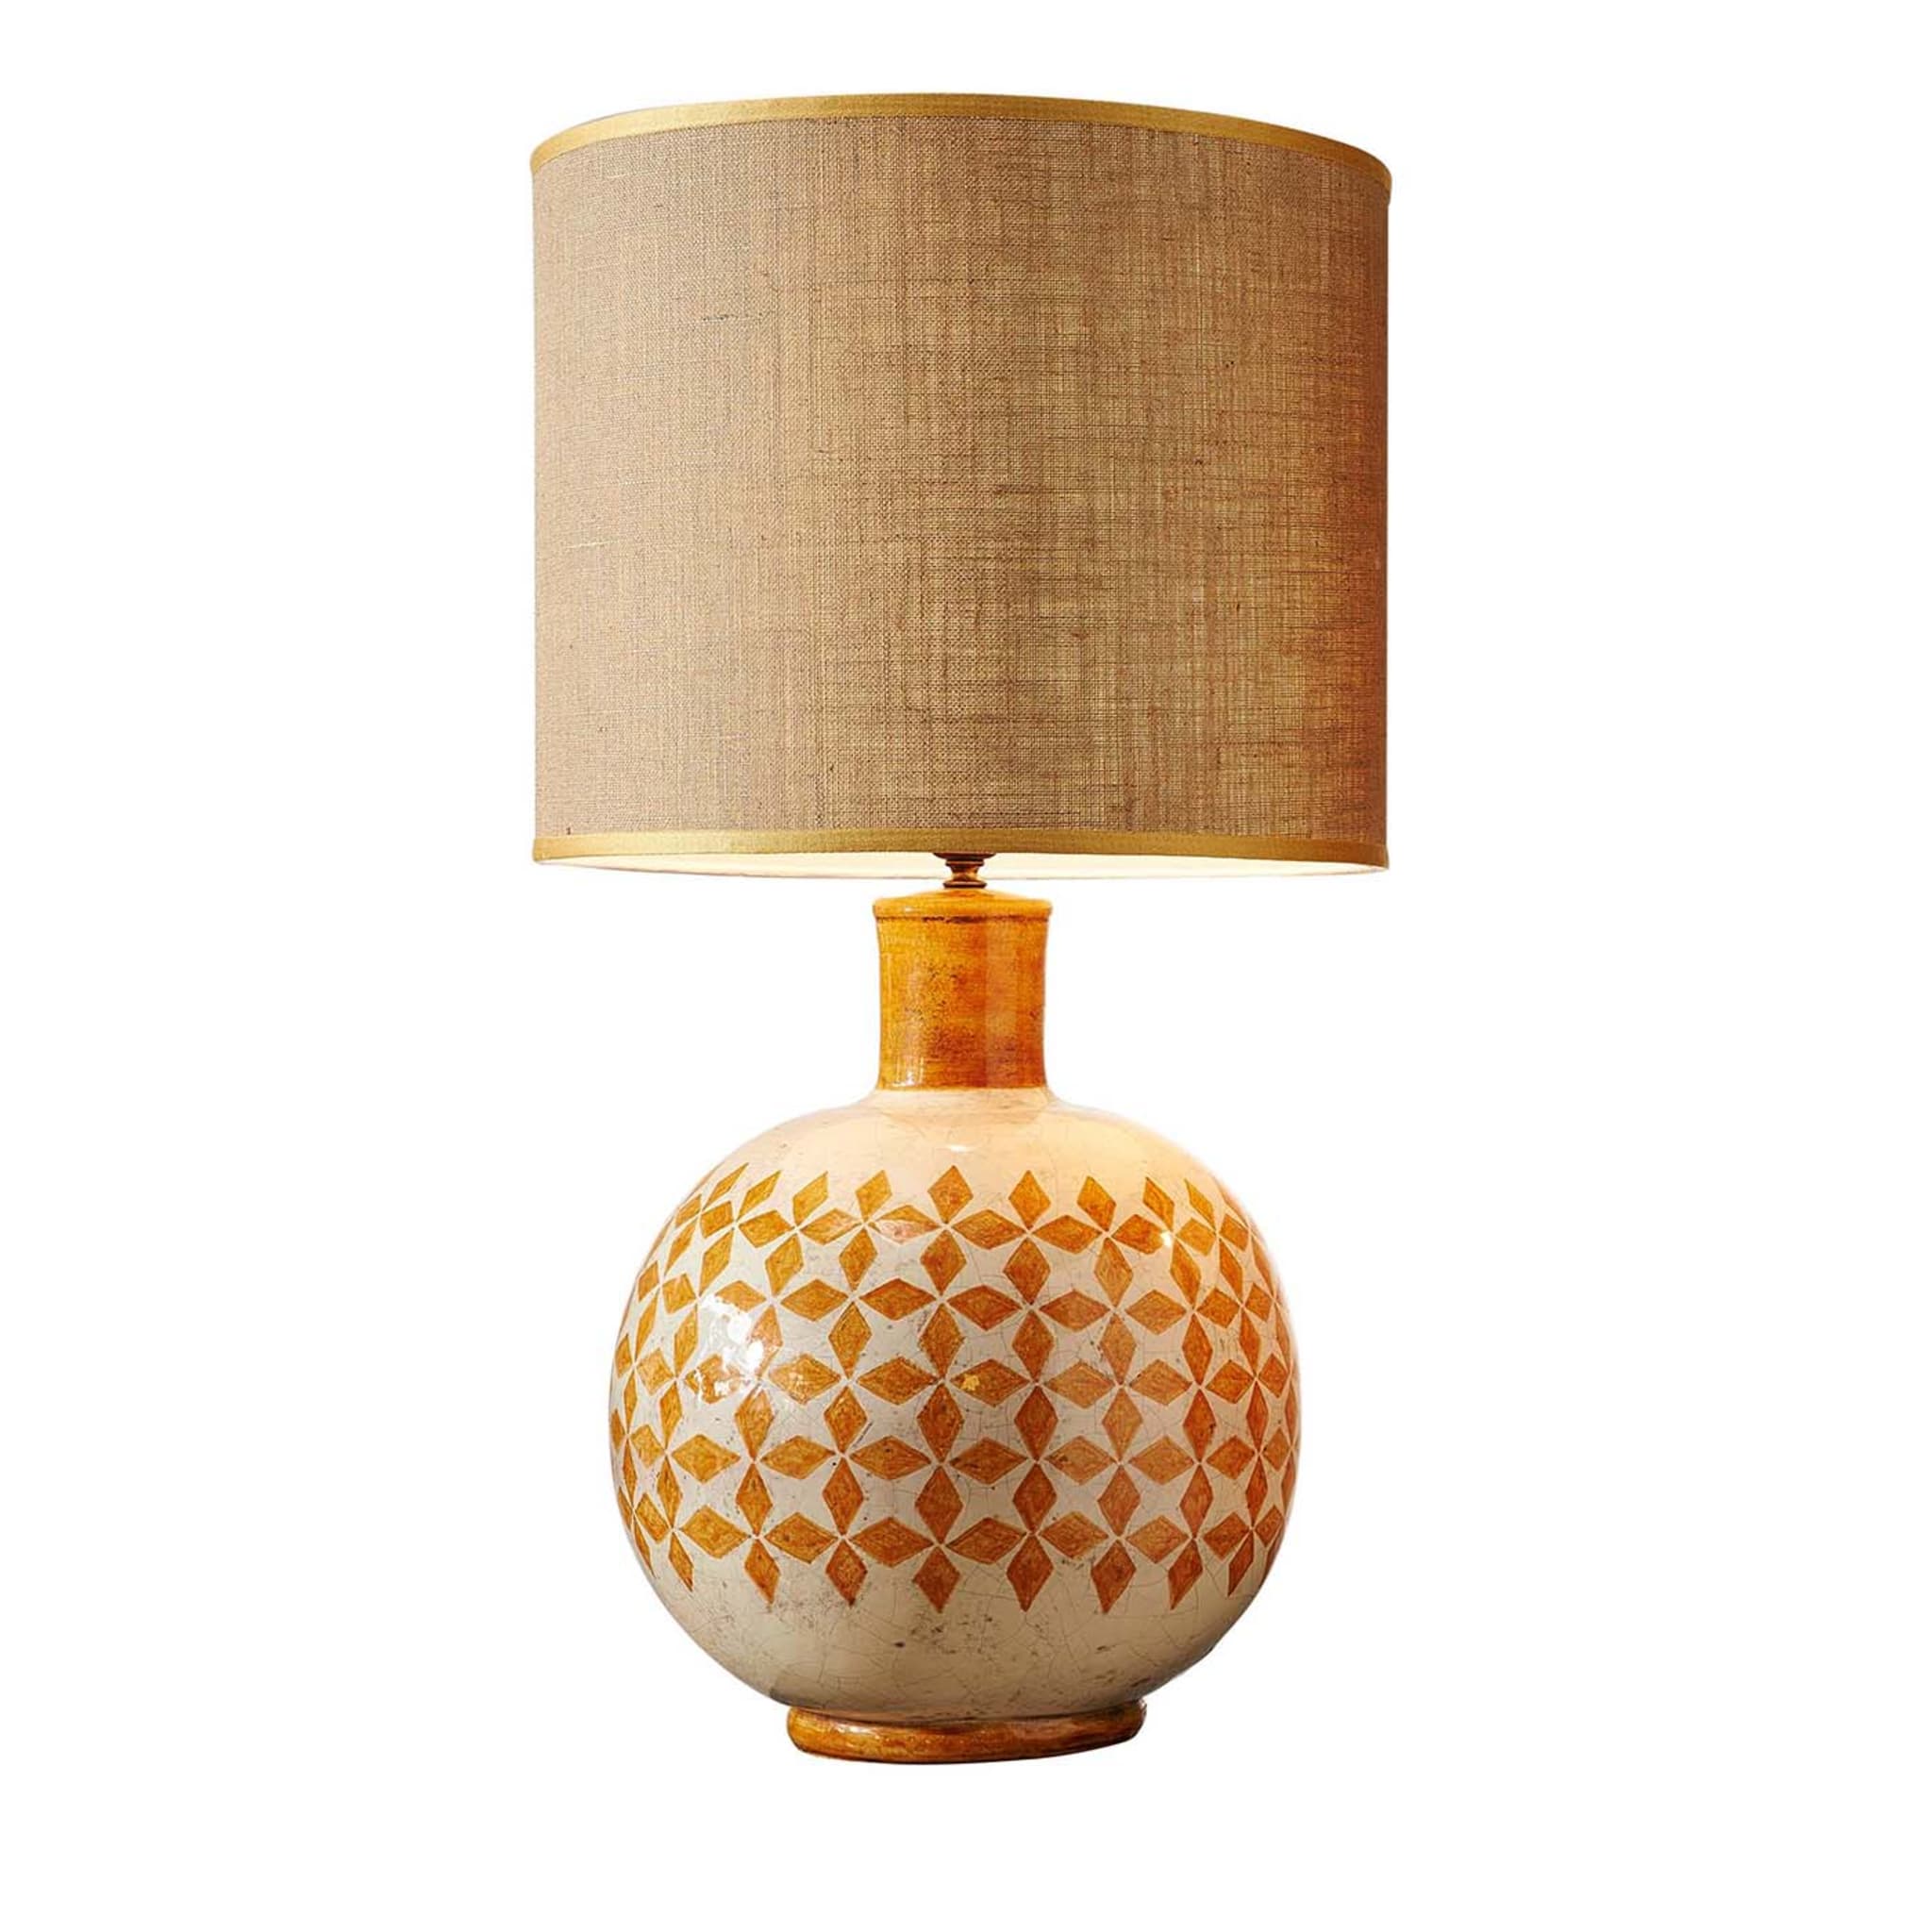 Orangefarbene Keramiklampe - Hauptansicht